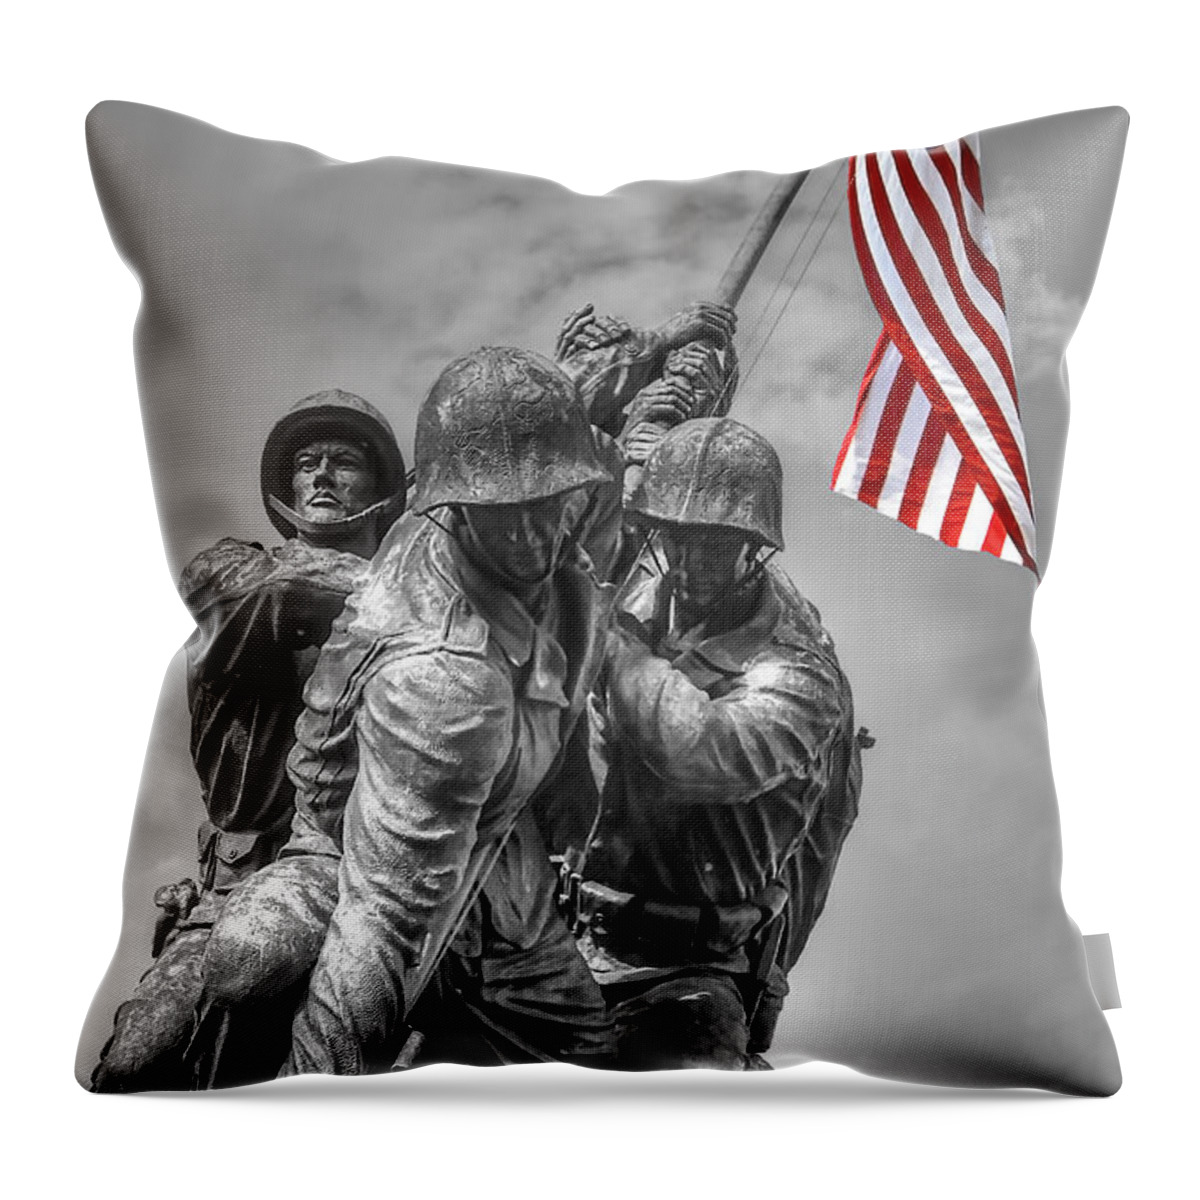 Iwo Jima Throw Pillow featuring the photograph Iwo Jima by Peter Kennett